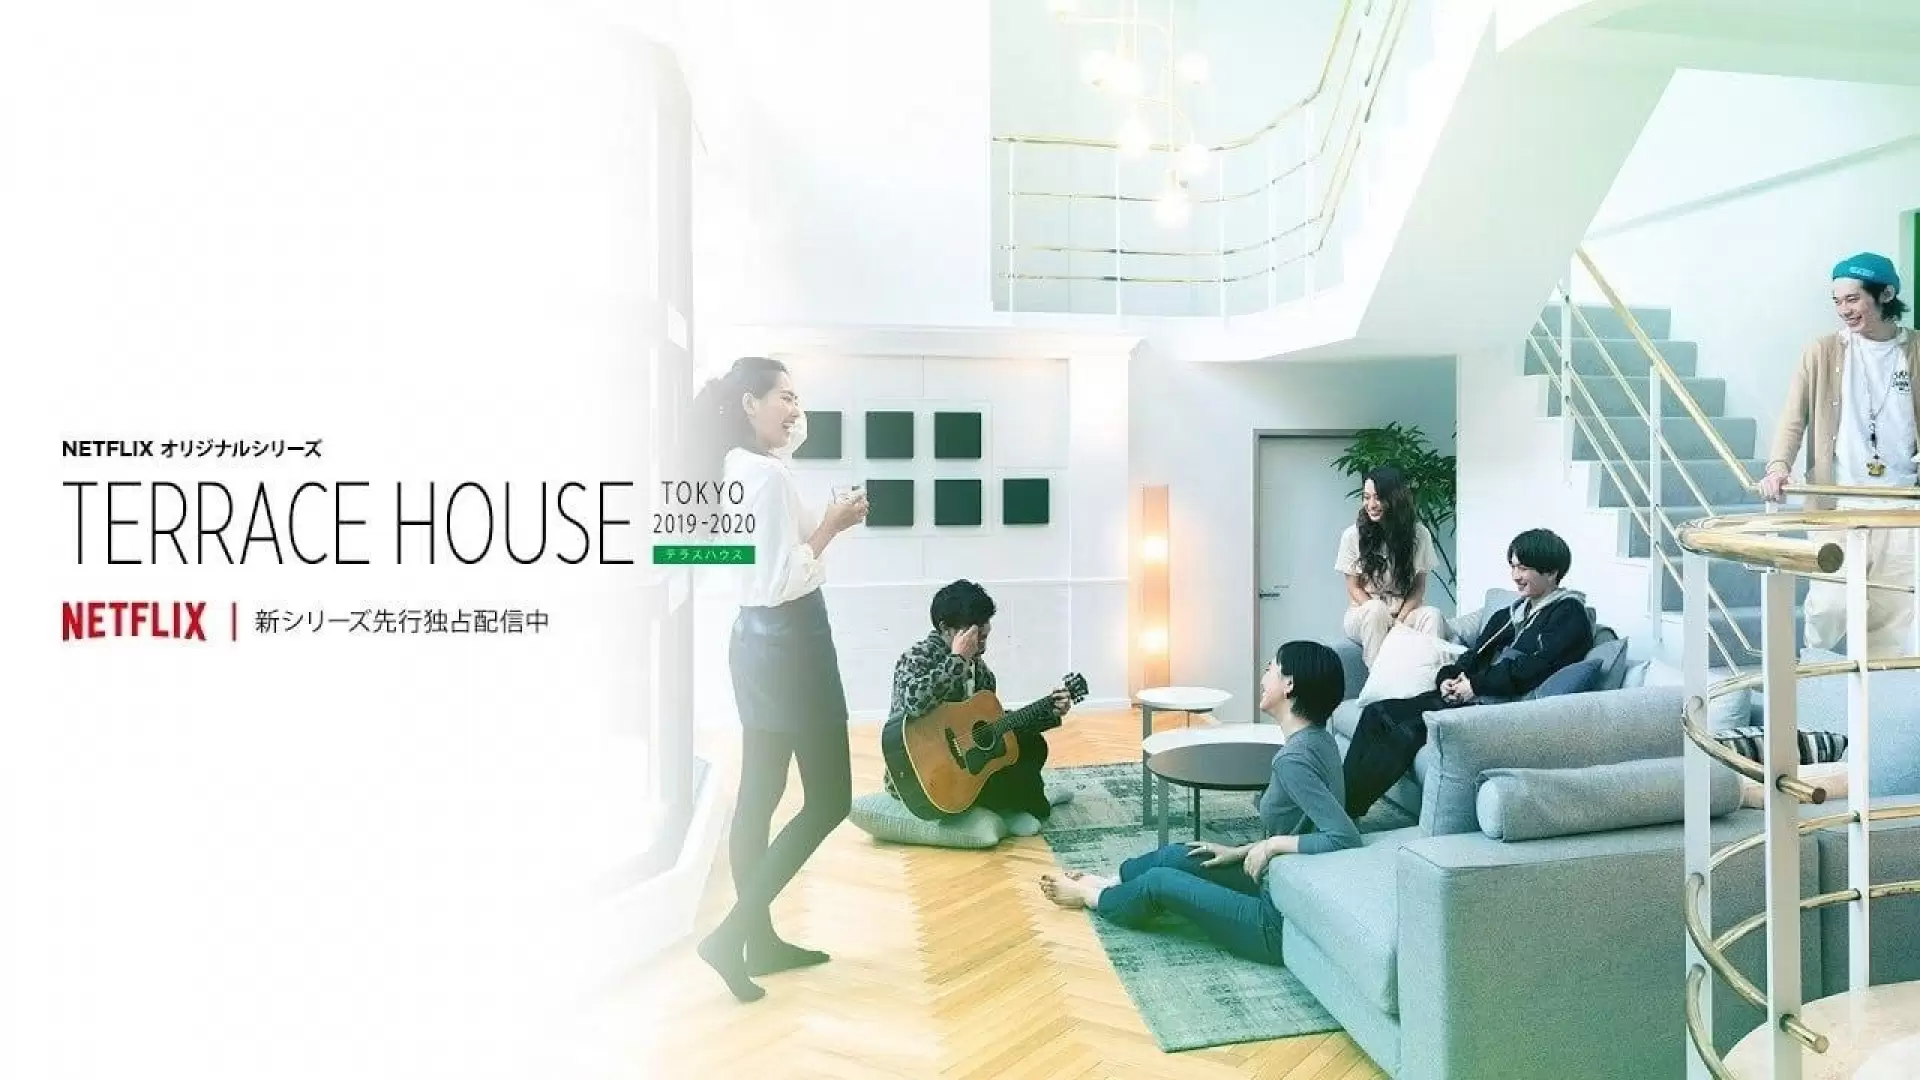 دانلود سریال Terrace House: Tokyo 2019-2020 2019 (تراس خانه توکیو)